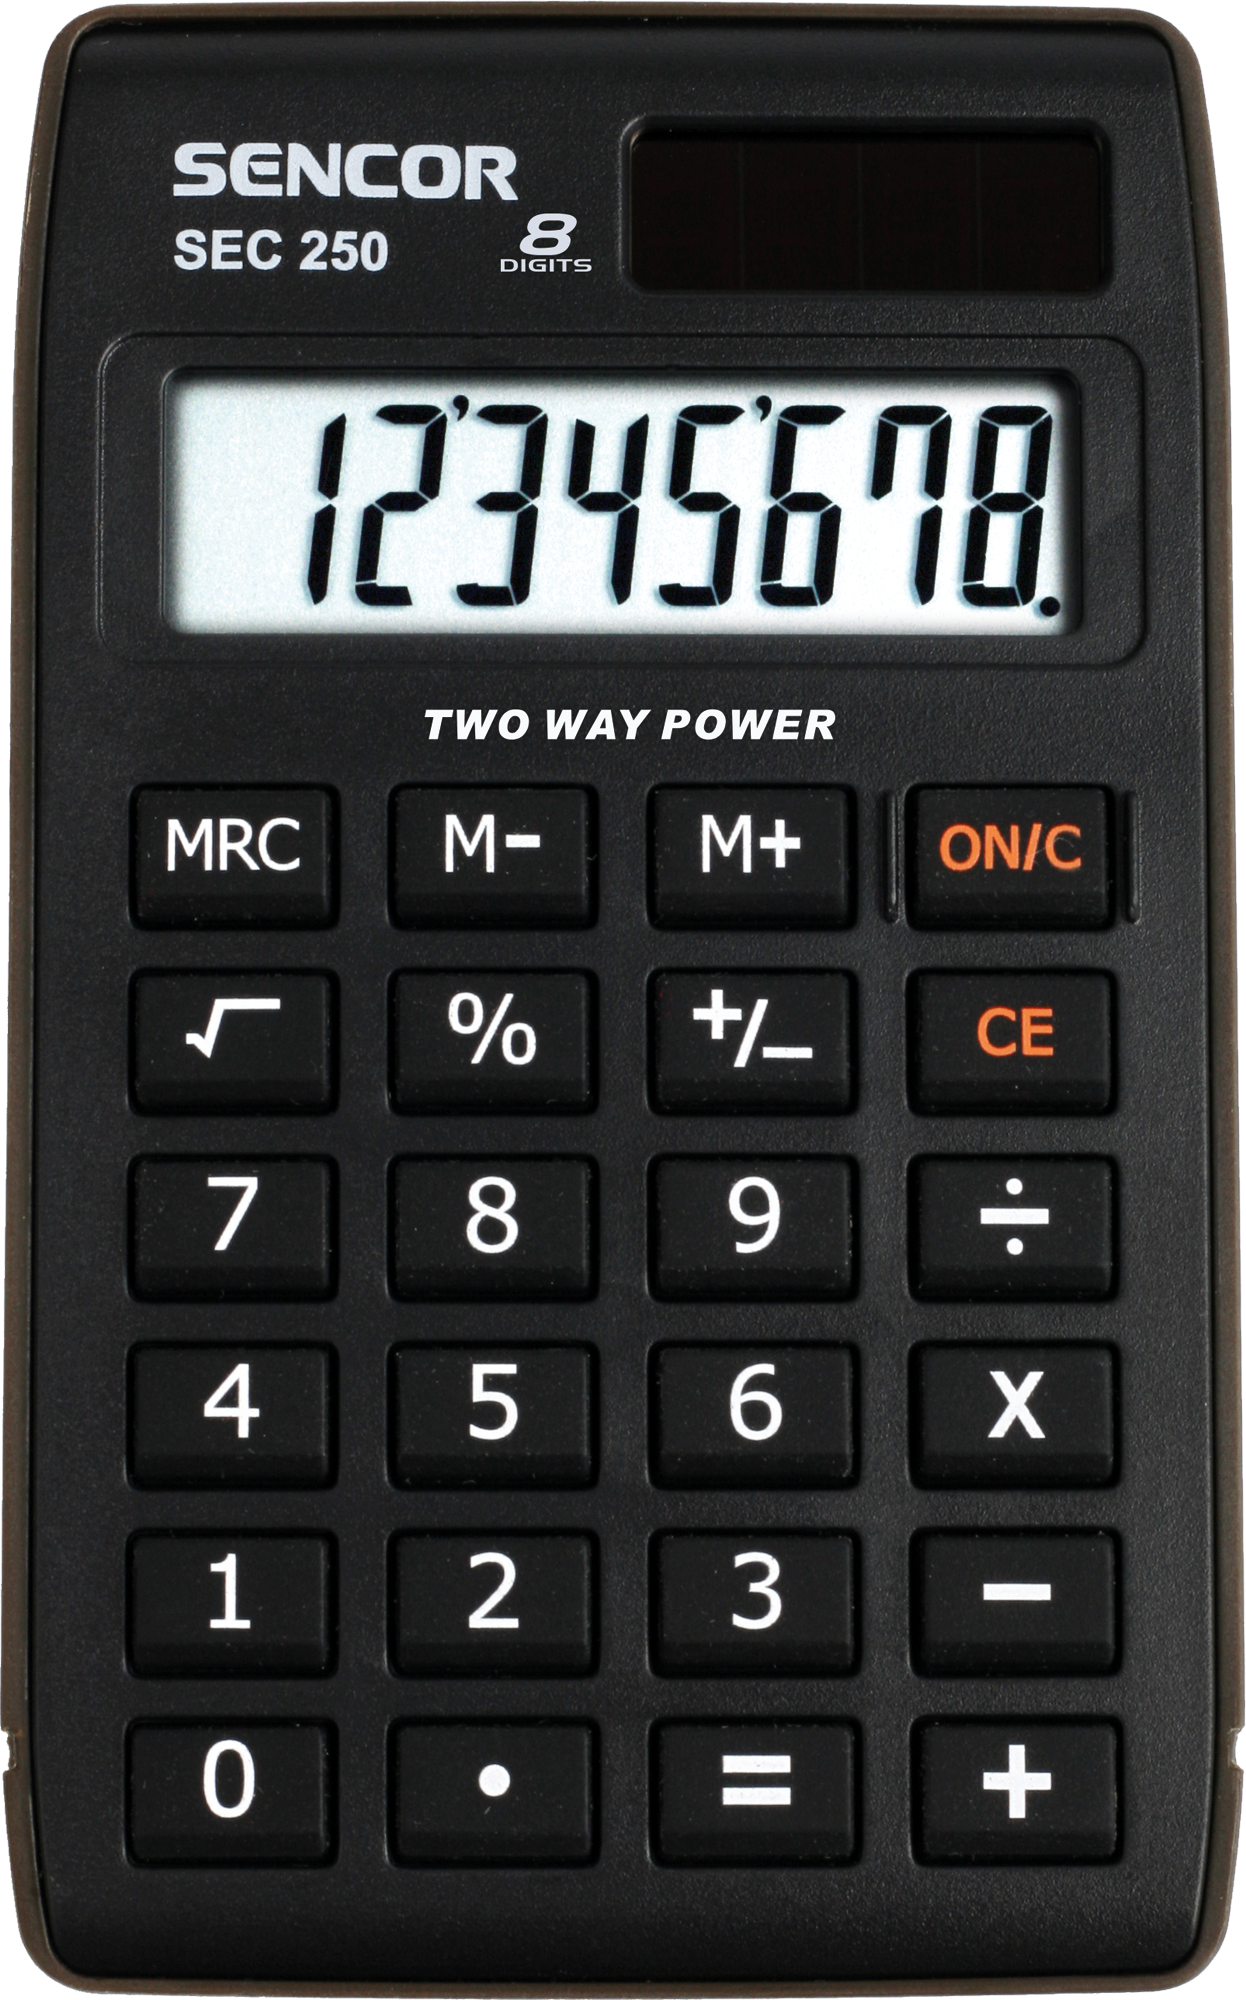 SENCOR SEC 250 Dual power kalkulators